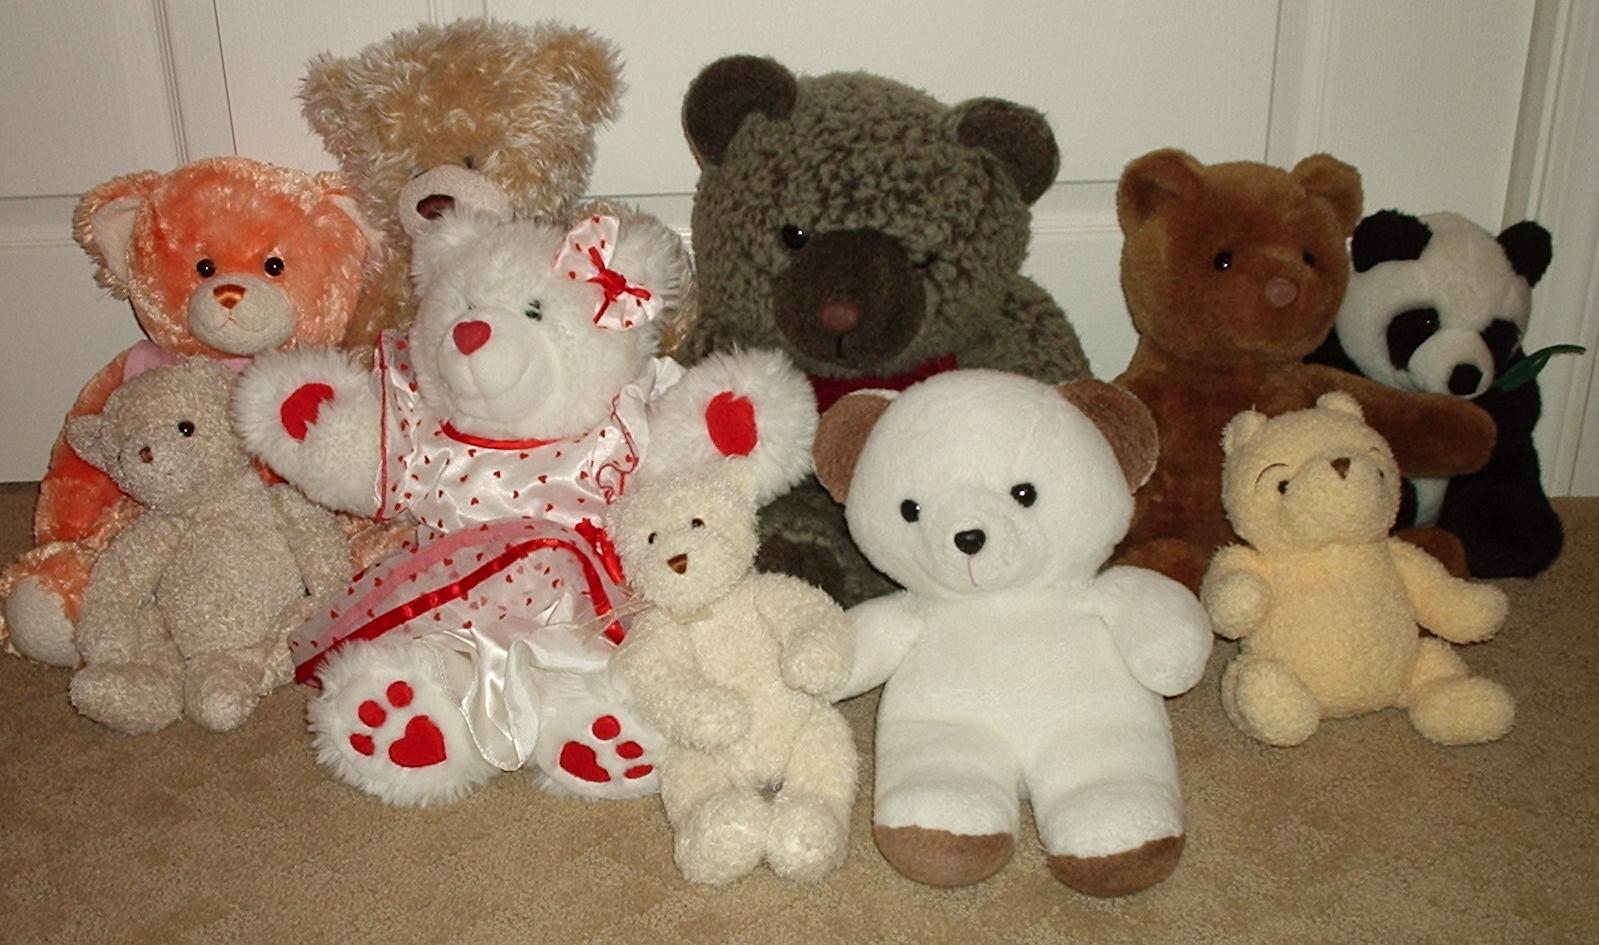 Teddy bear - Simple English Wikipedia, the free encyclopedia